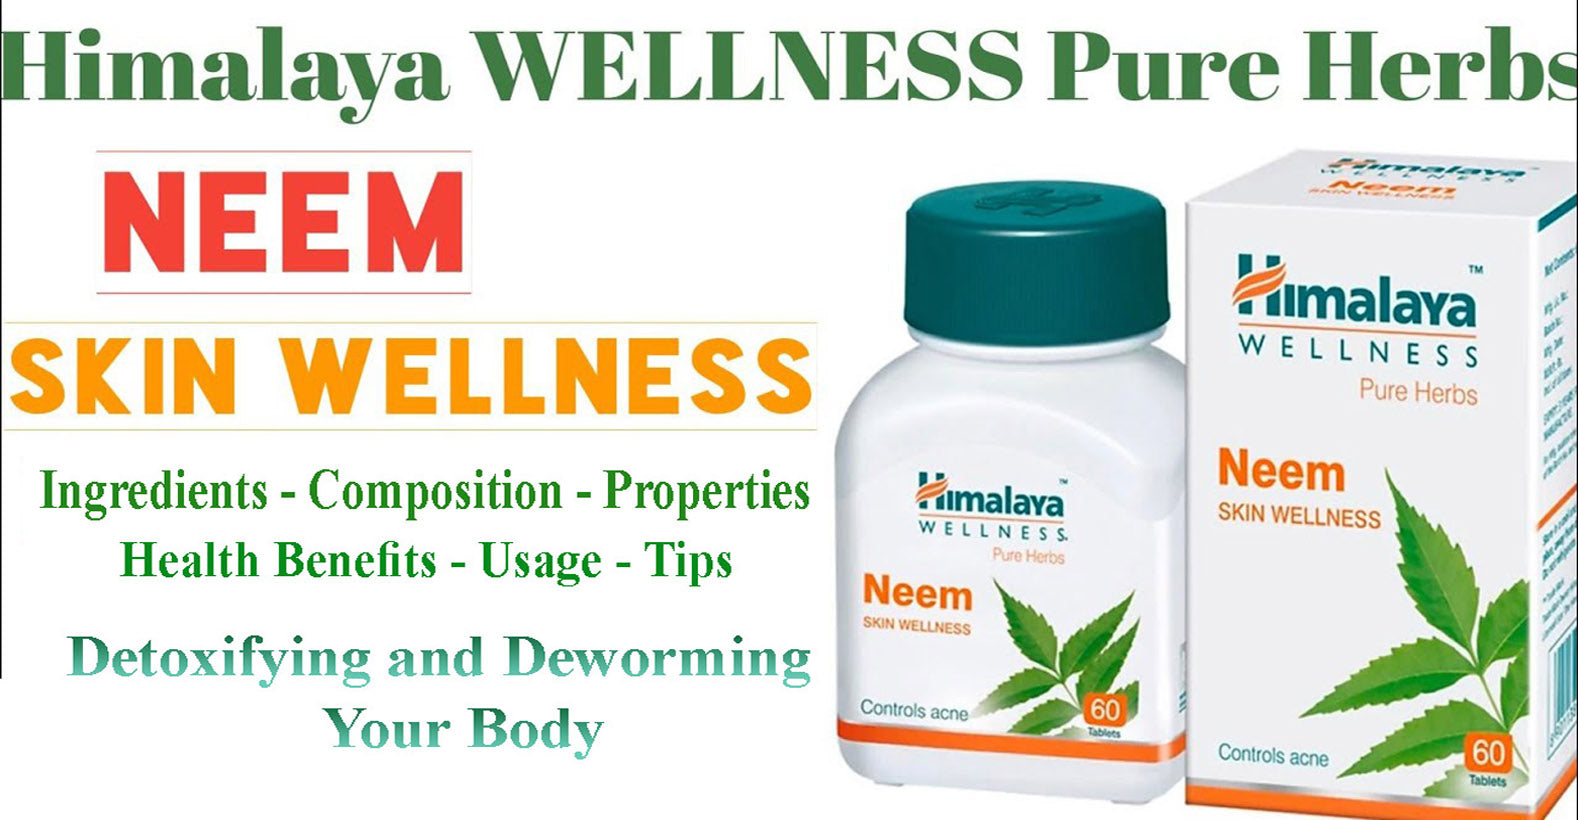 Himalaya Wellness Pure Herbs Neem Skin Wellness - Ingredients, Composition, Properties, Health Benefits, Usage, Tips